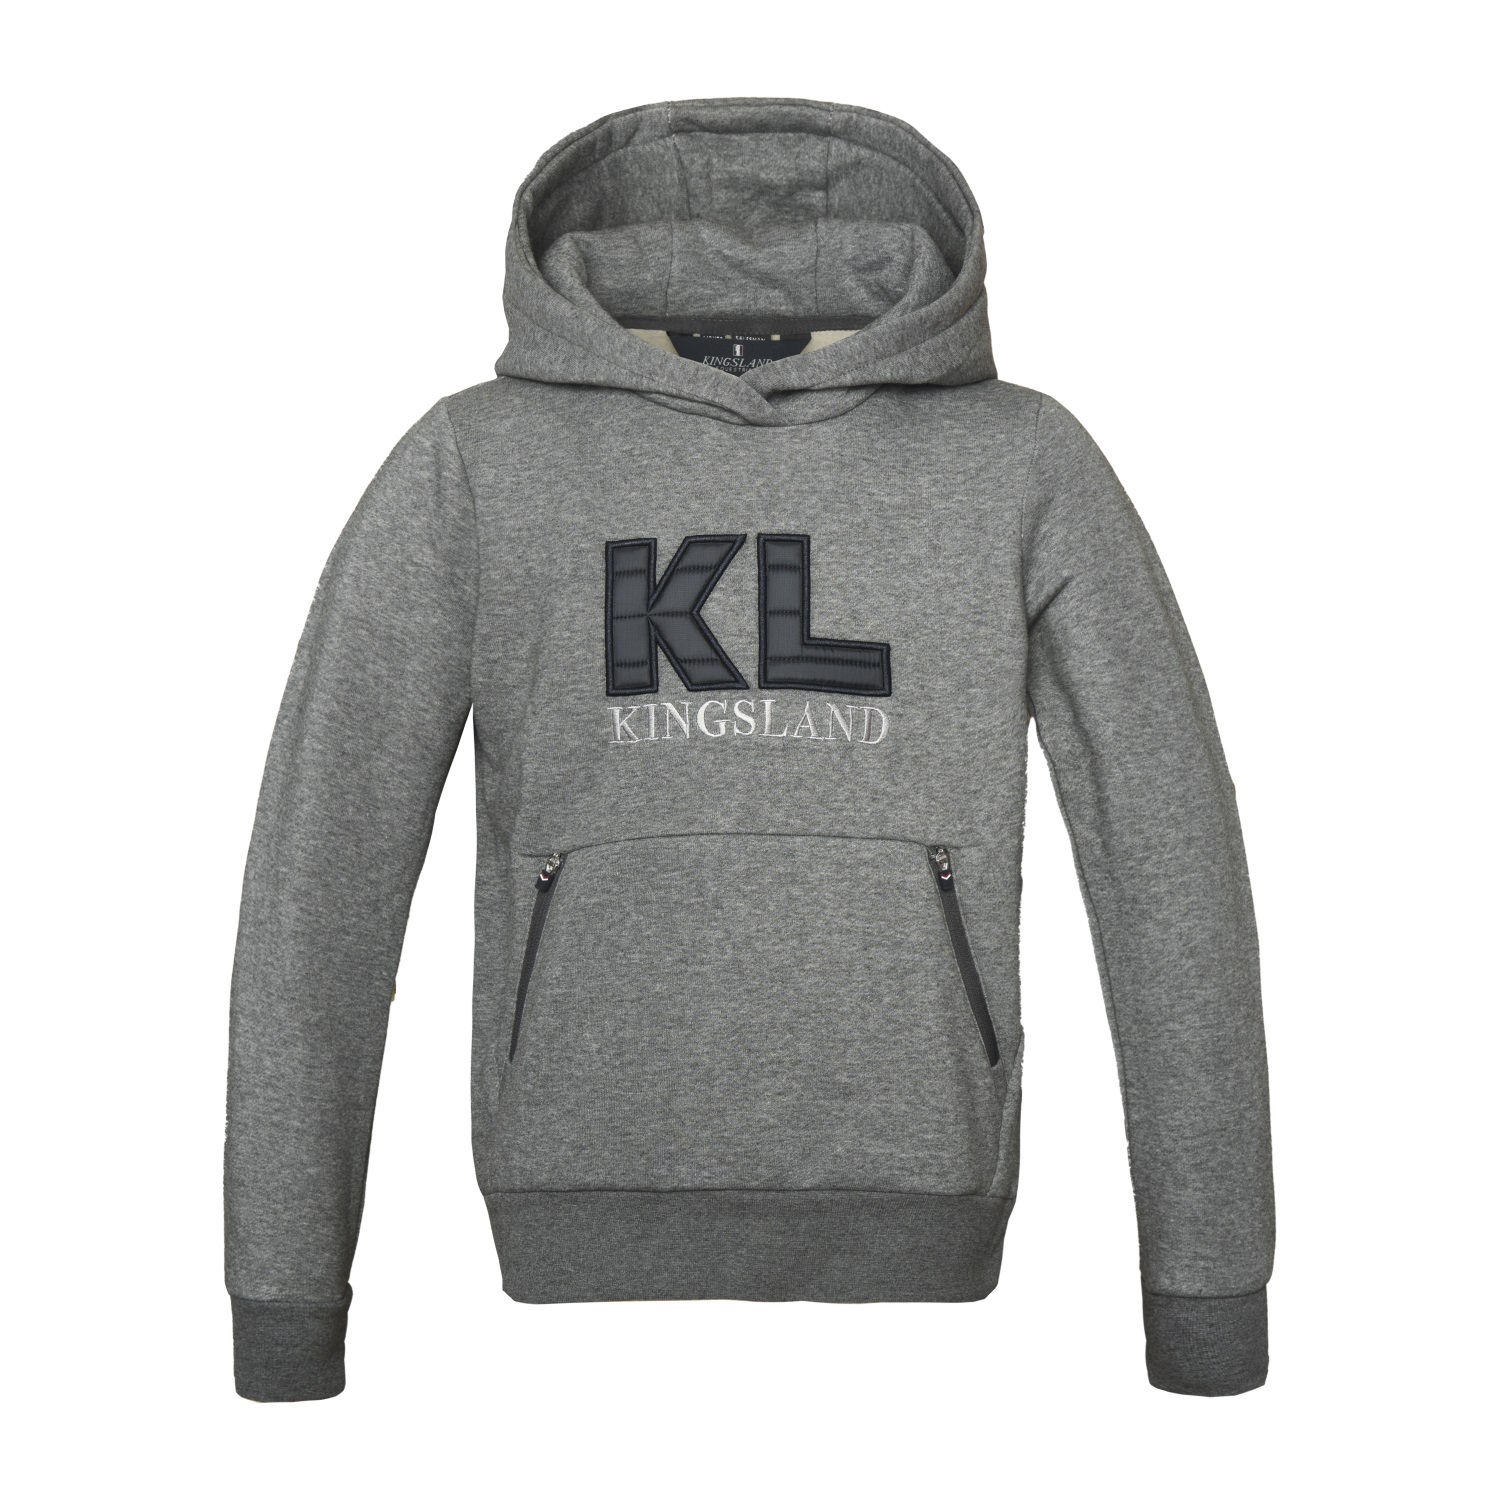 KINGSLAND Unisex Sweatshirt Hoodie KLeliae - grey forged iron - M - 1